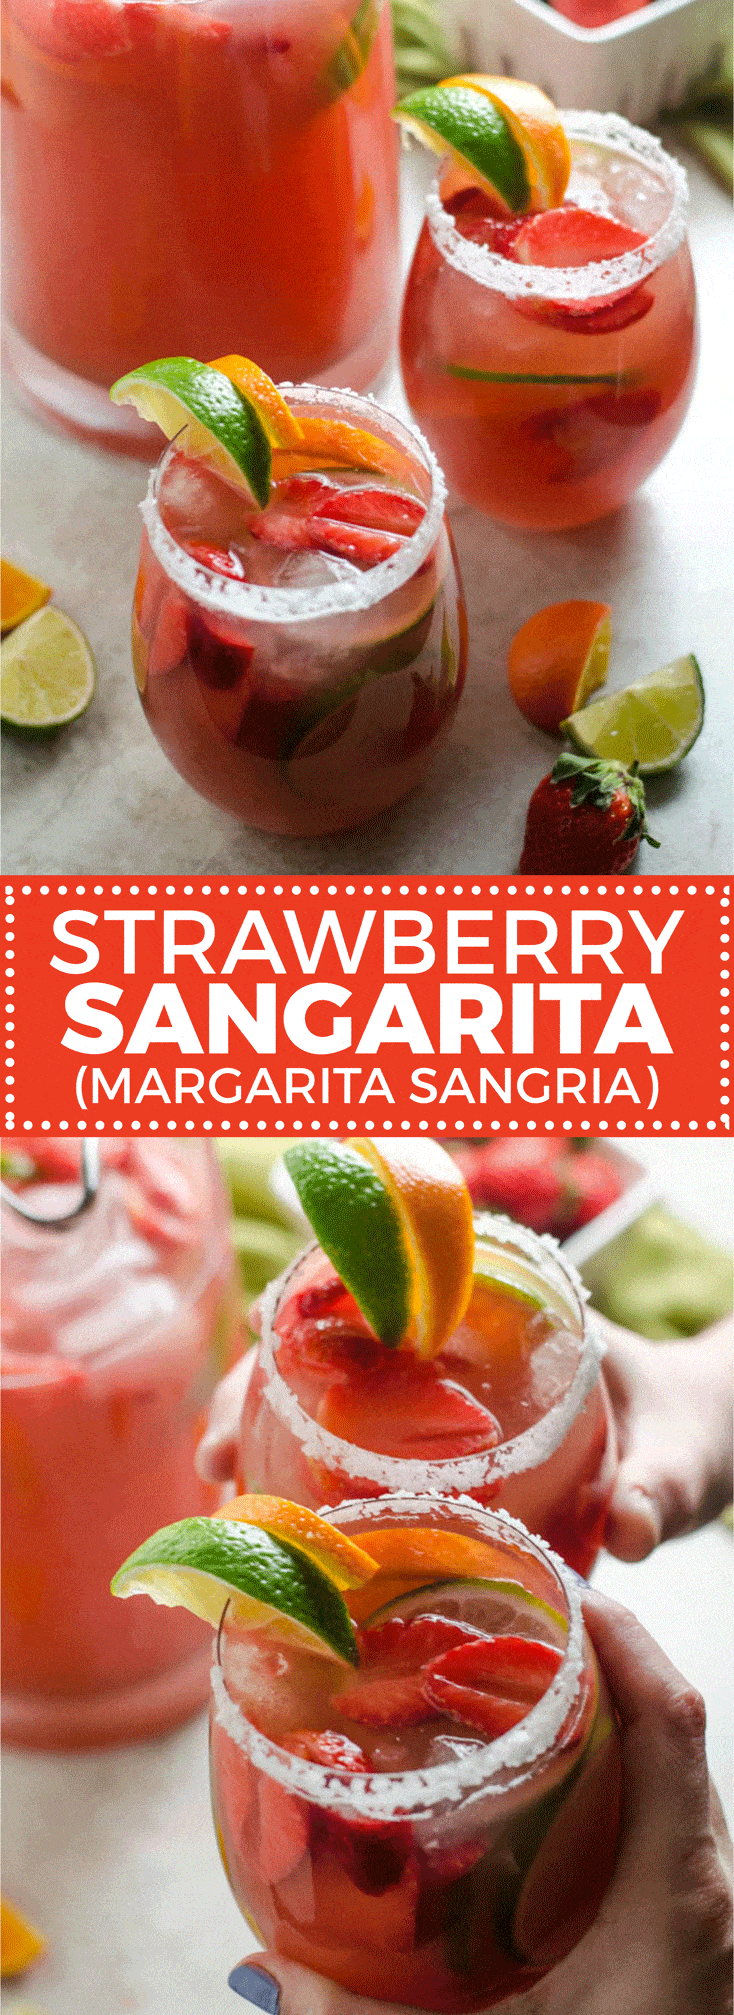 Strawberry Sangarita Margarita Sangria Host The Toast,Antiques Near Me